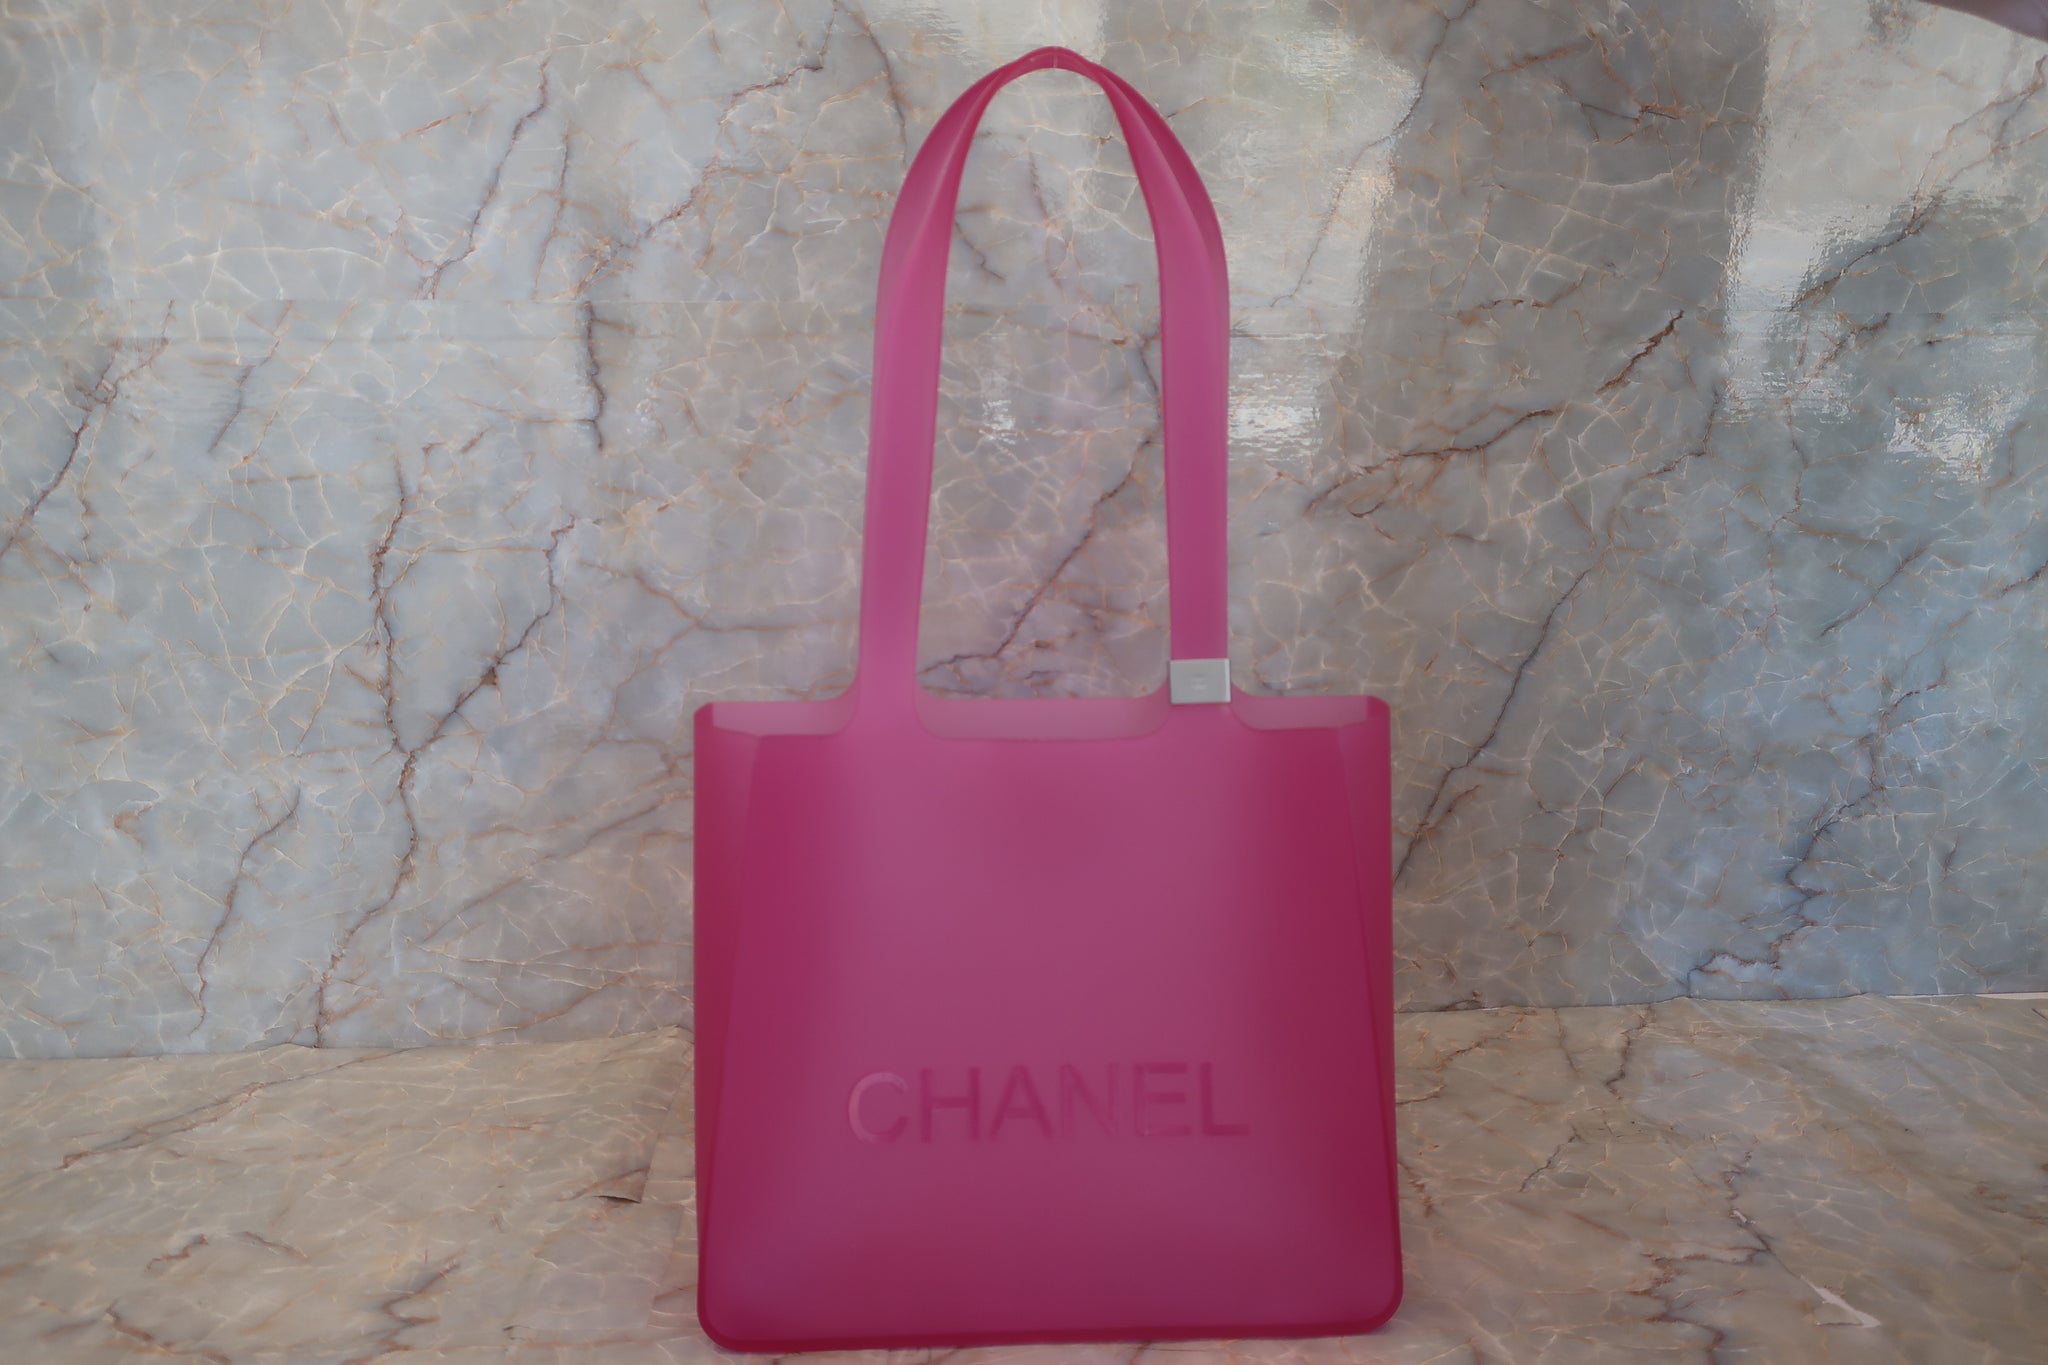 chanel pink cloth bag purse